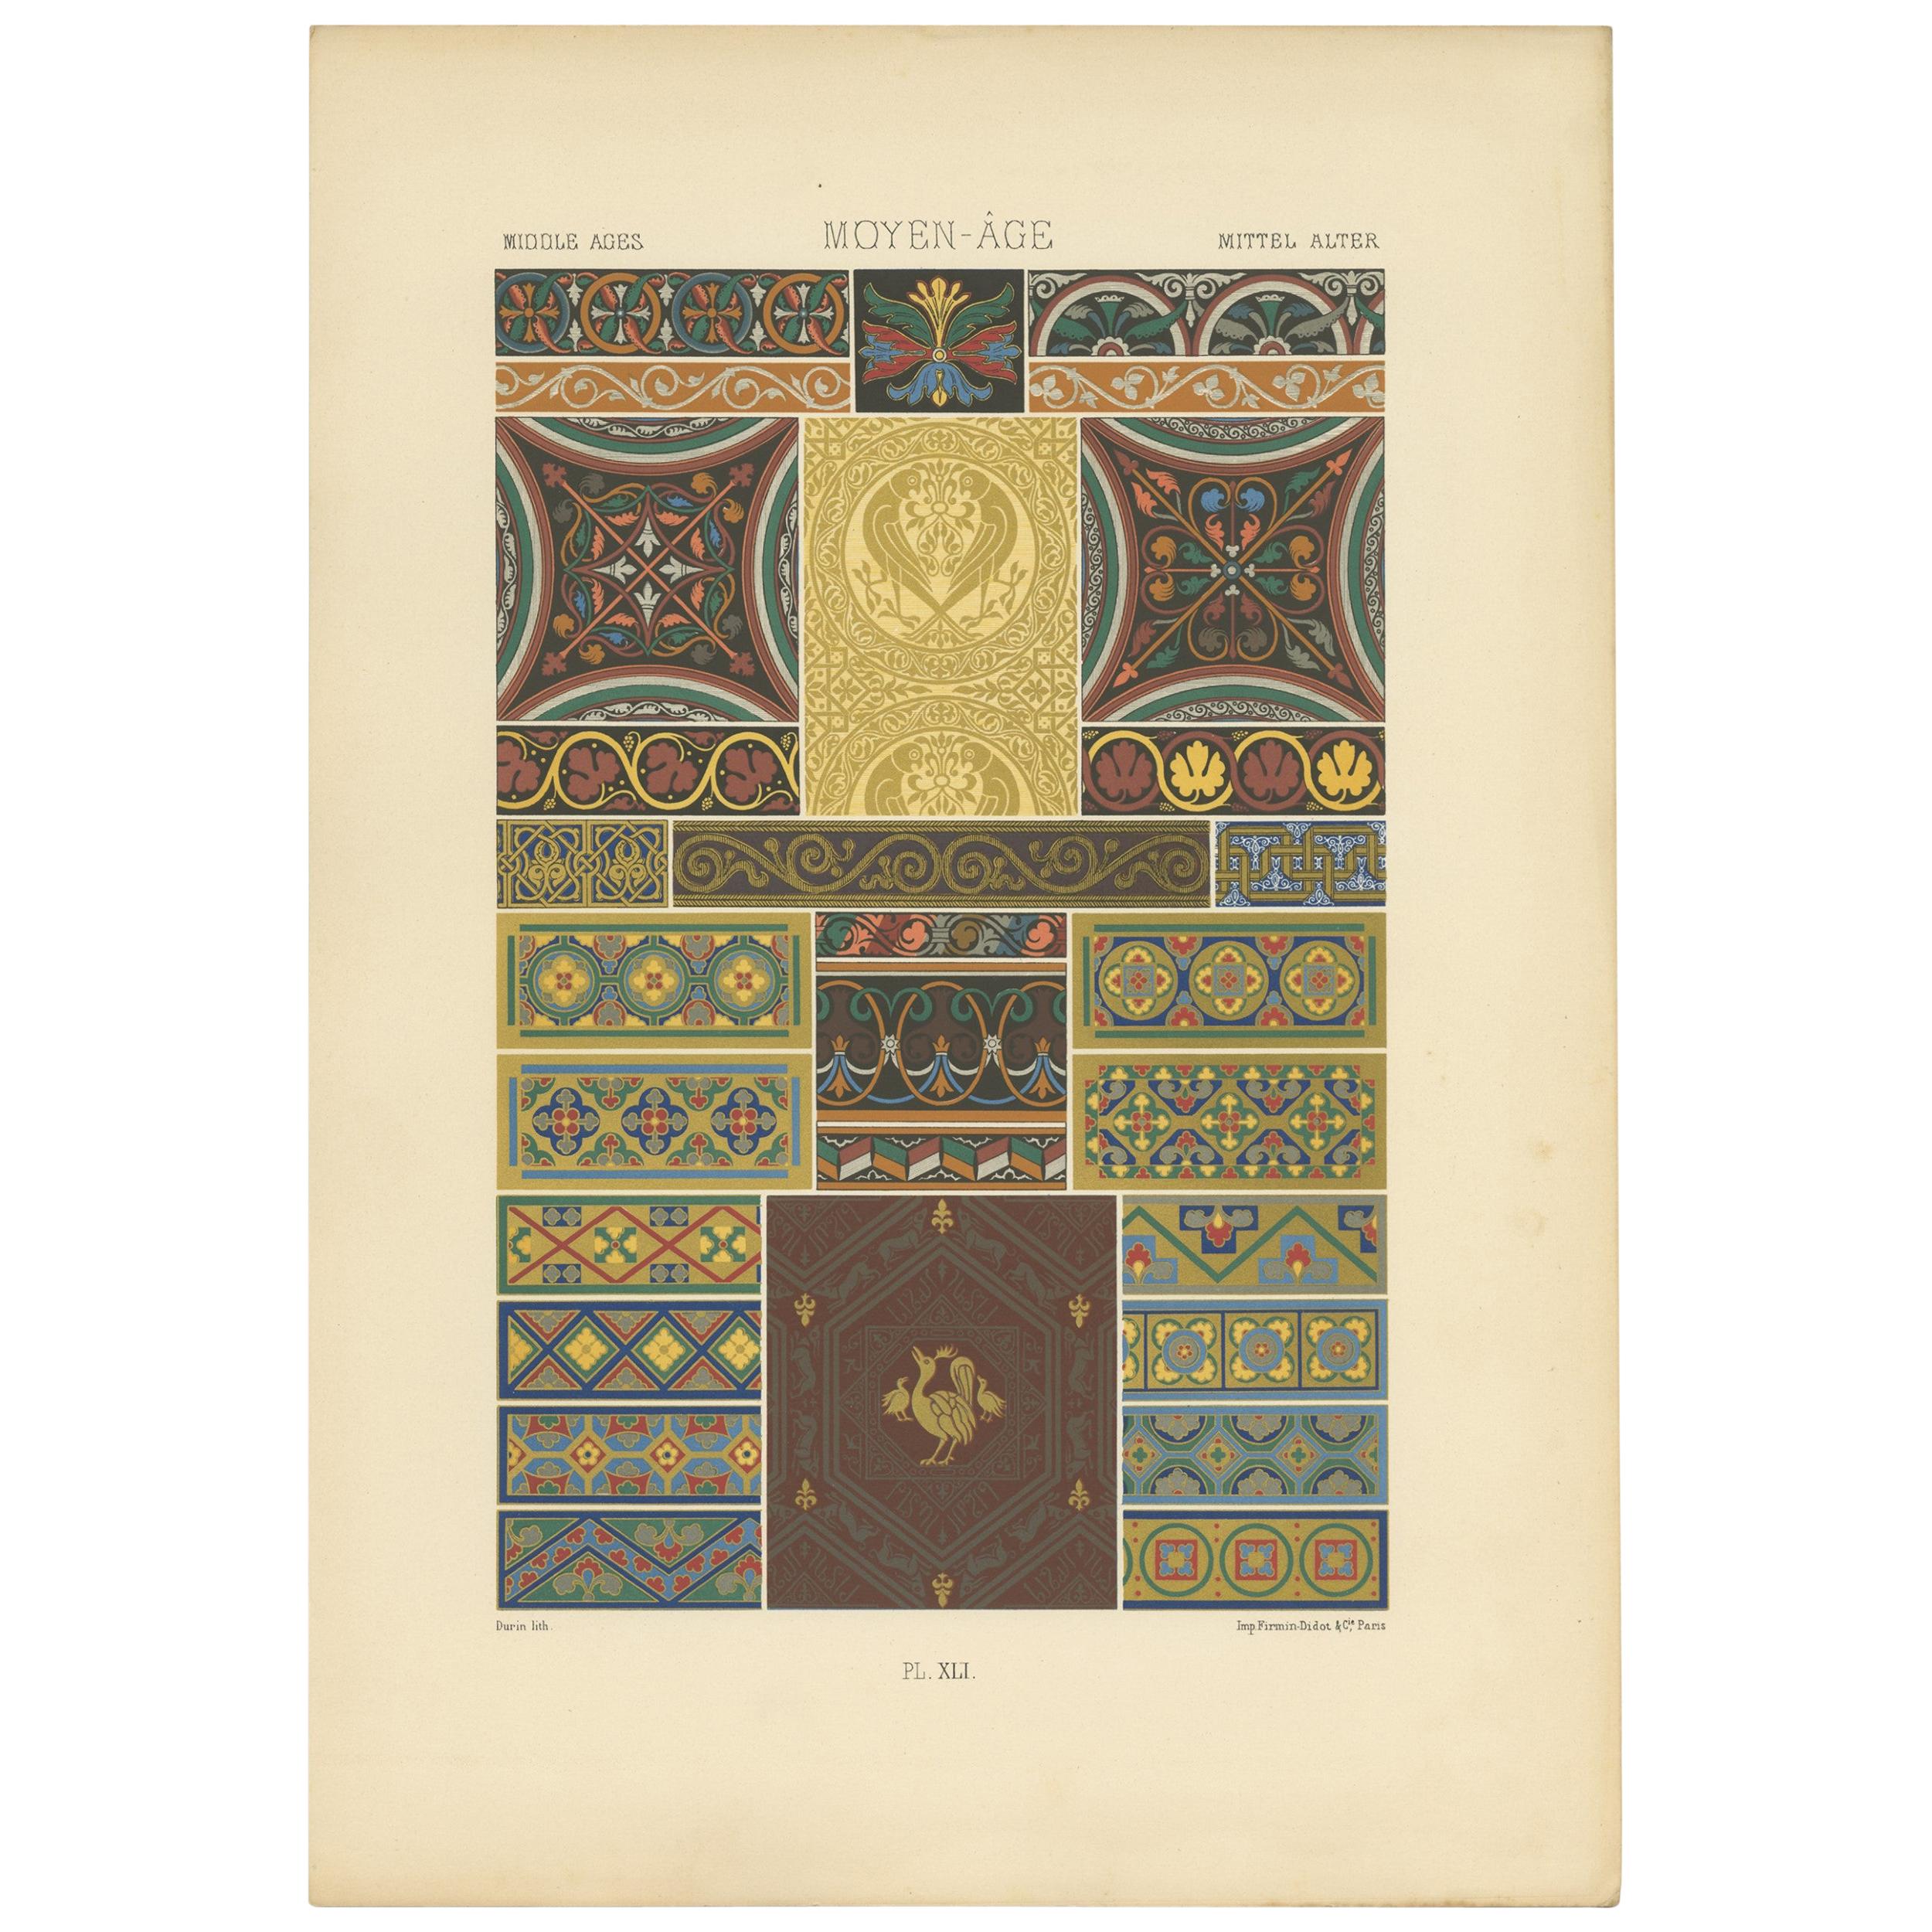 Pl. 41 Antique Print of Middle Ages Ornaments by Racinet (c.1890)